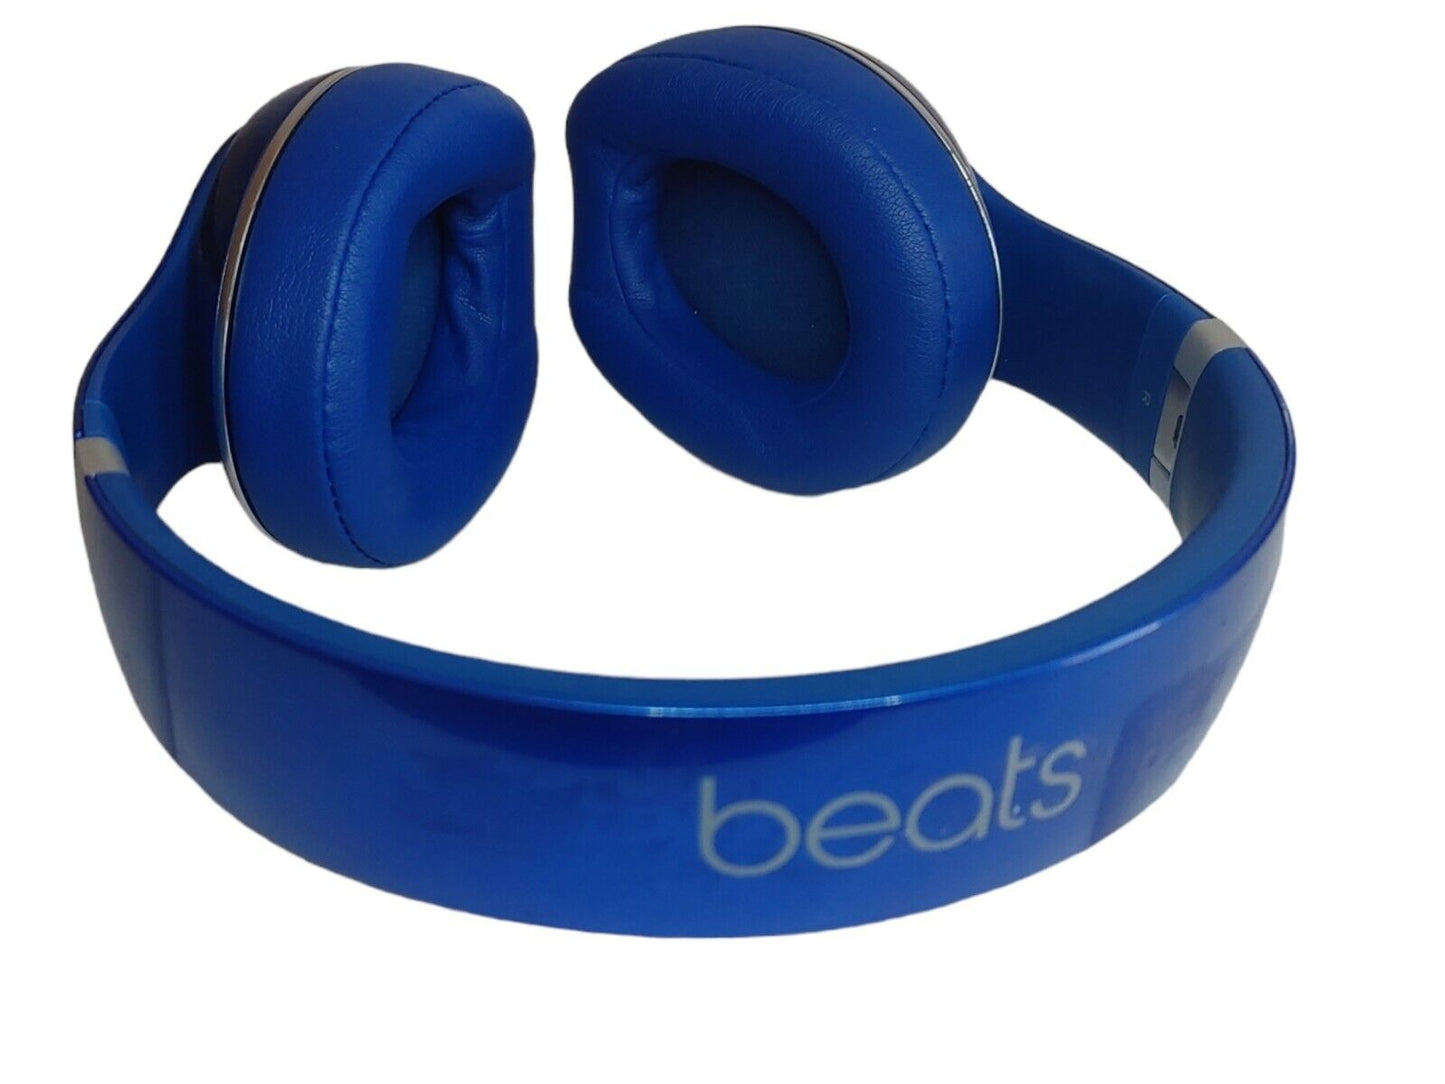 Beats by Dr. Dre Studio 2 / Solo 3 Wireless Over-Ear Headphones (Refurbished)